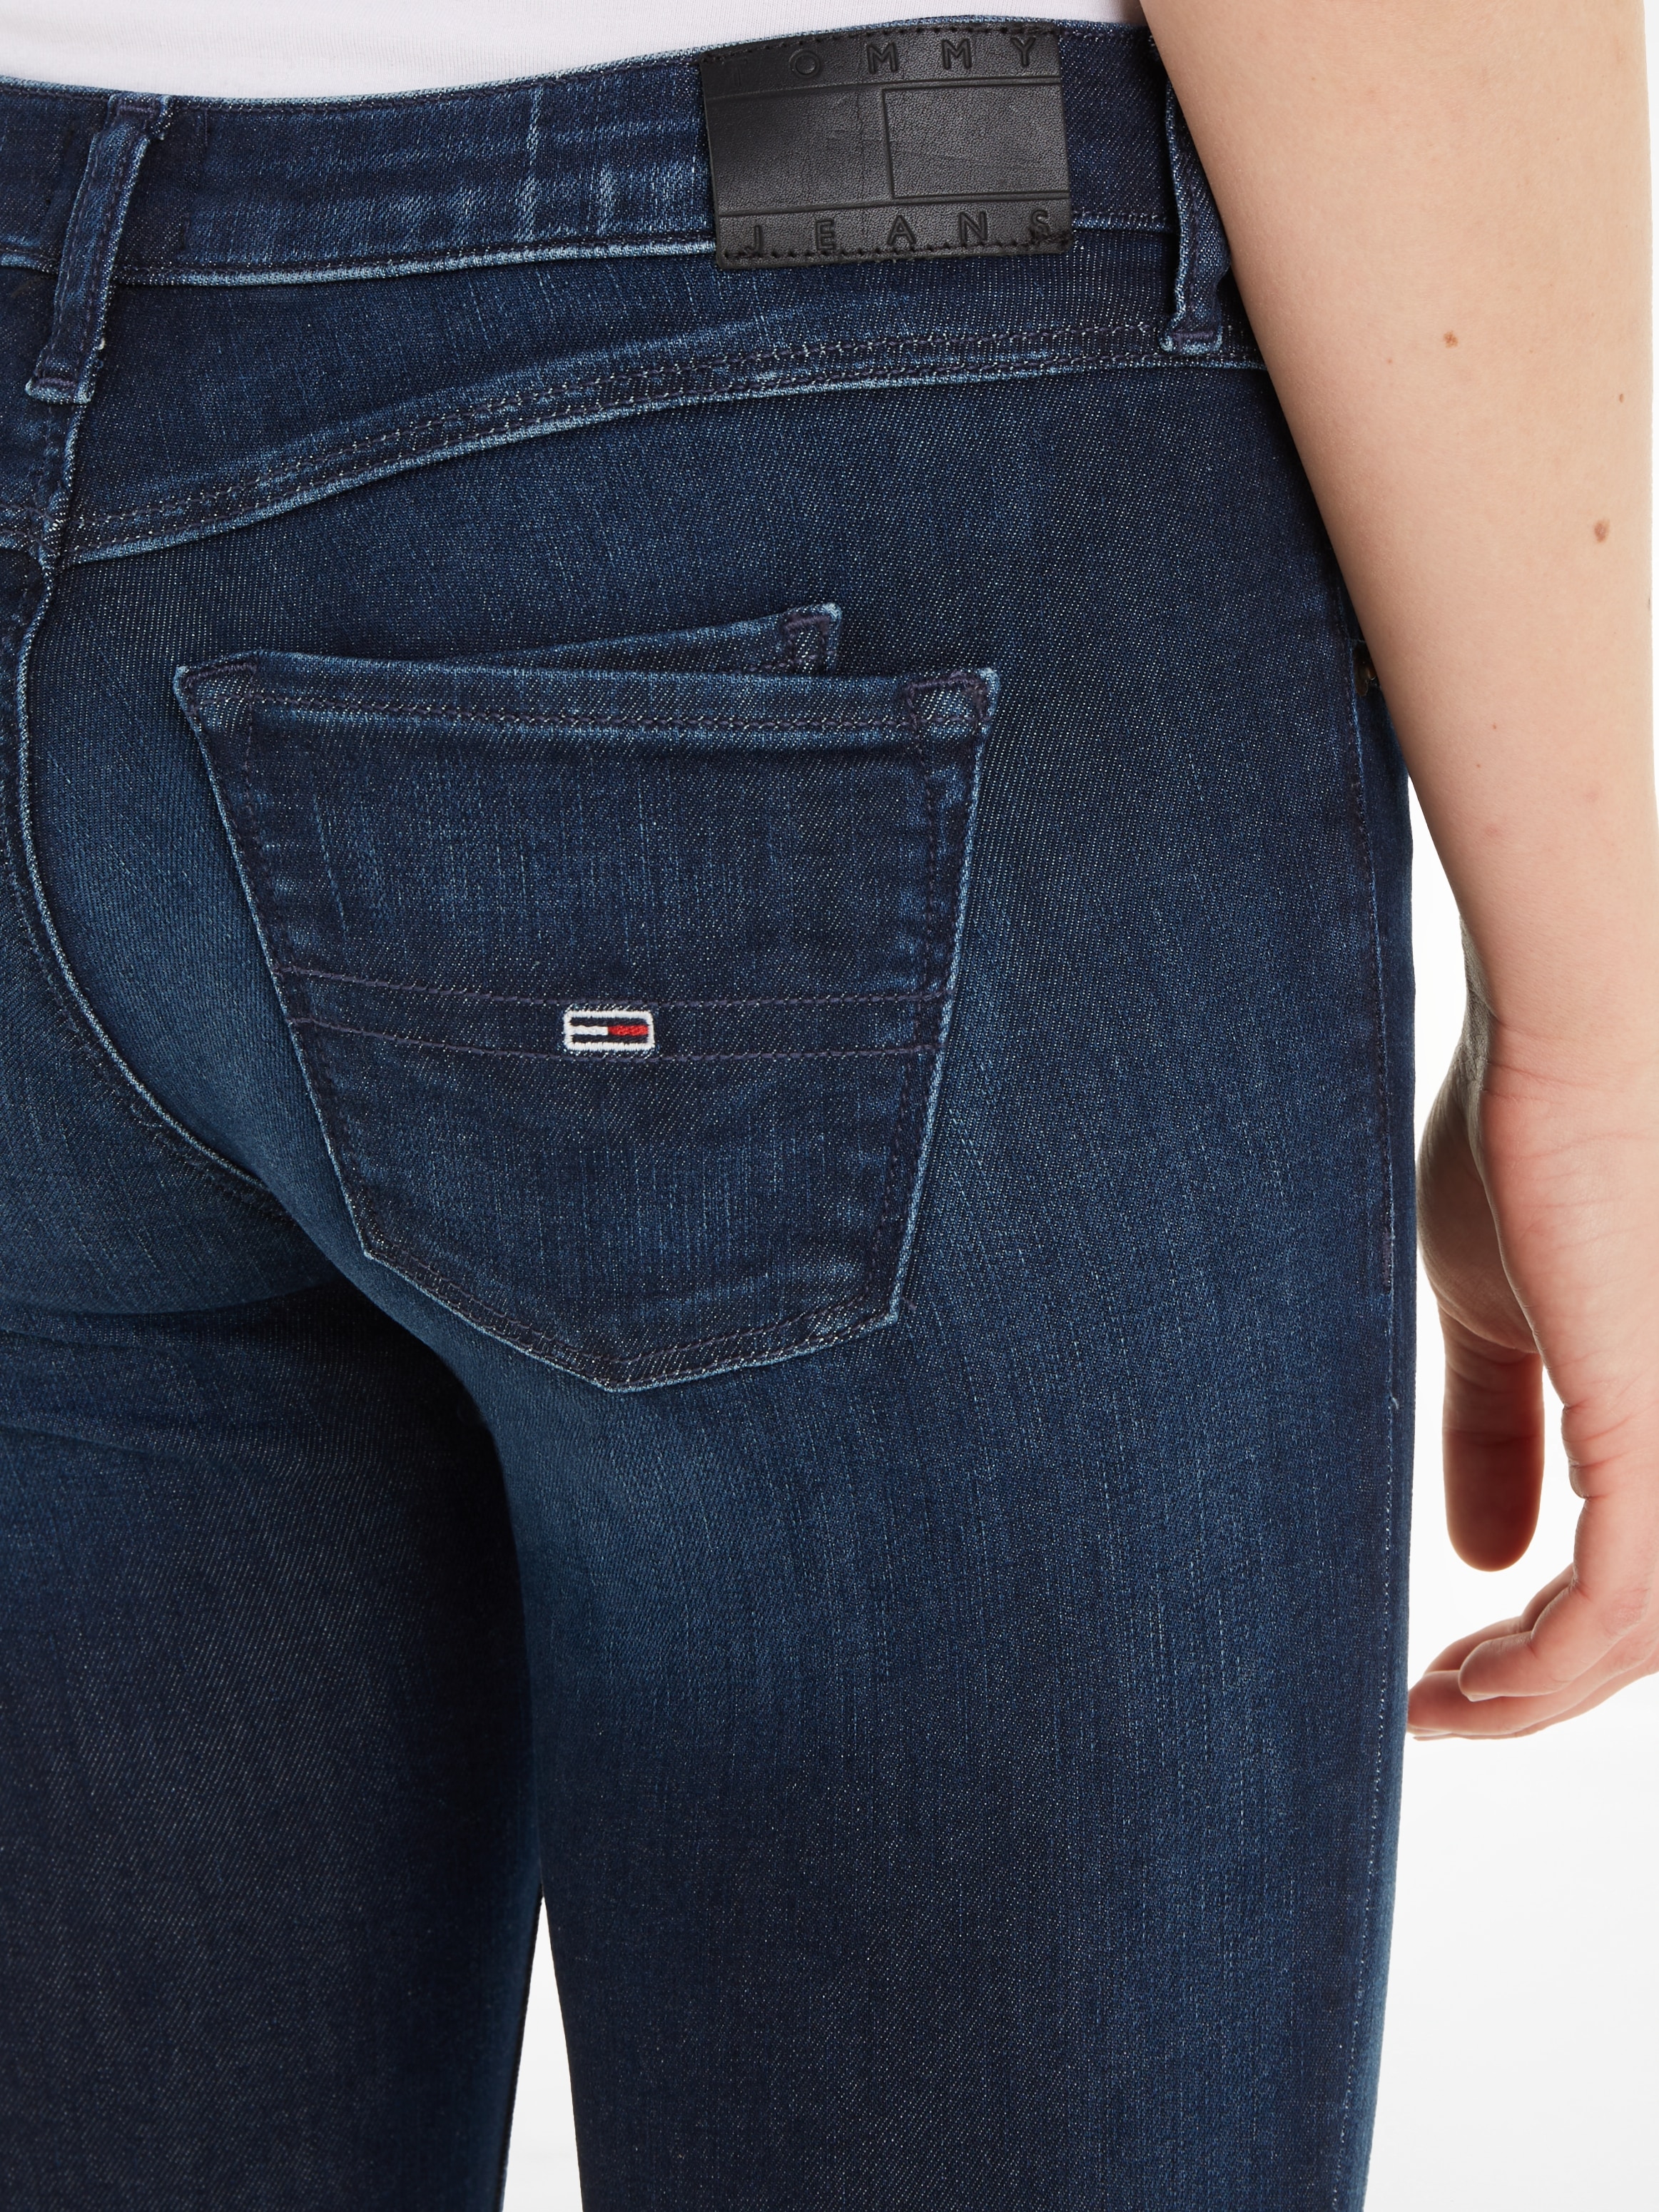 Bequeme OTTO online bei »Scarlett«, Ledermarkenlabel Jeans mit Jeans Tommy